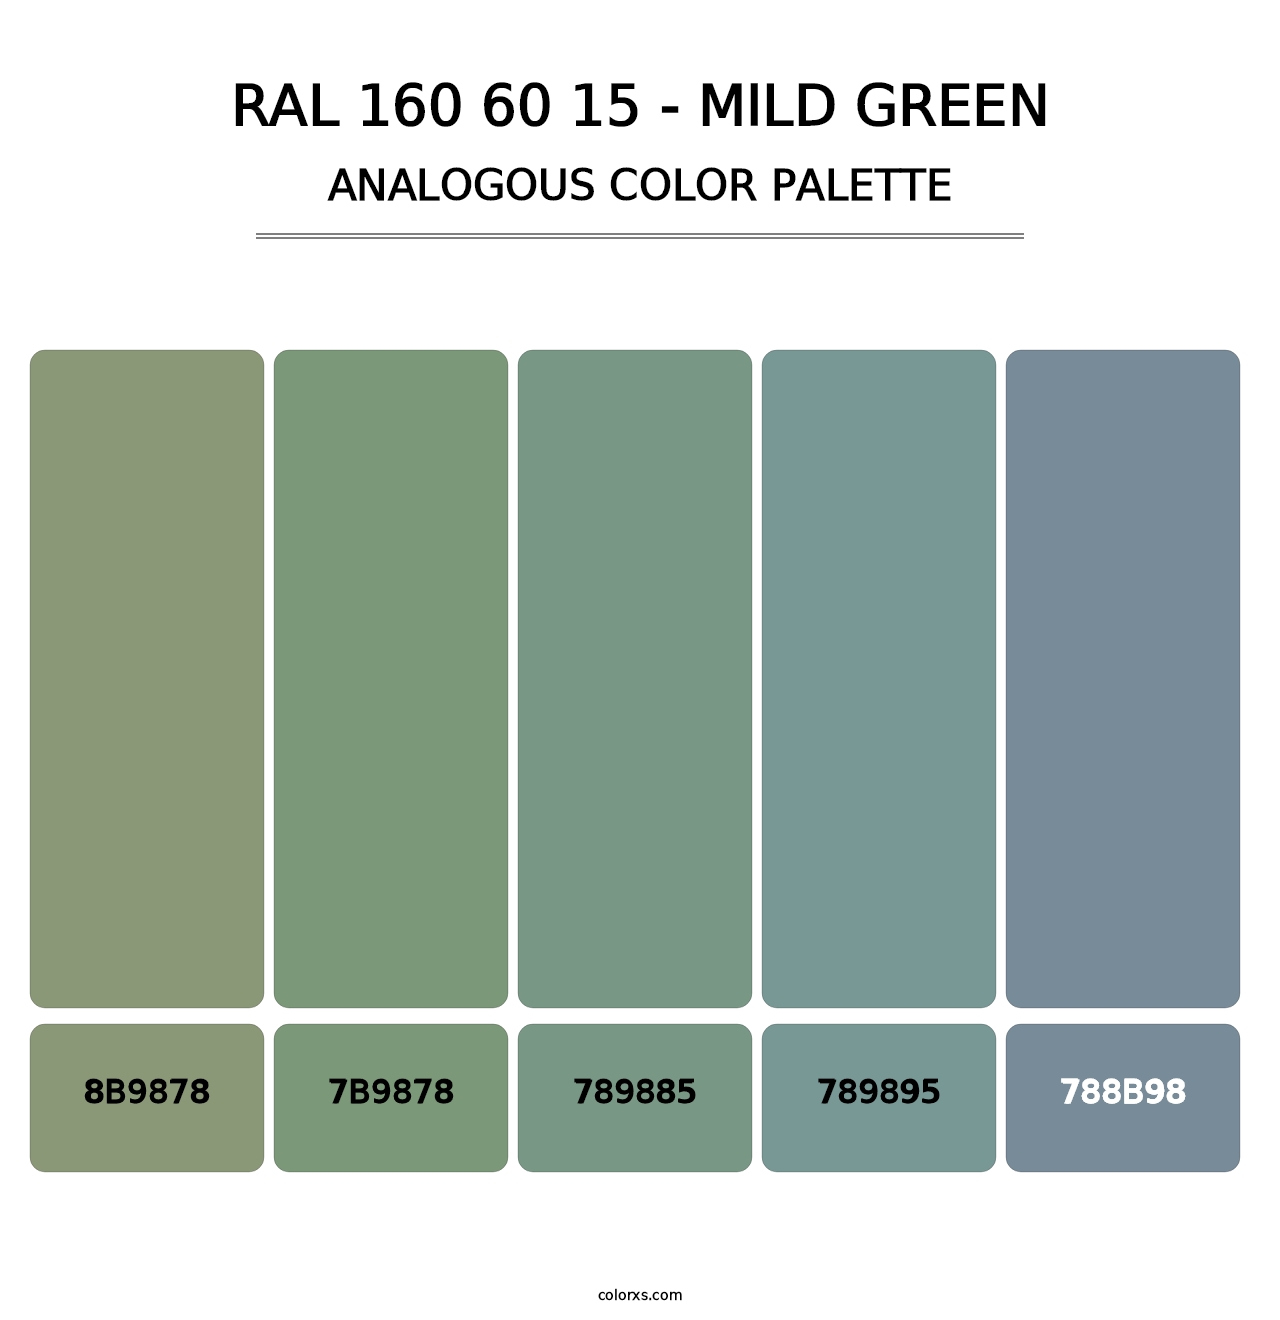 RAL 160 60 15 - Mild Green - Analogous Color Palette